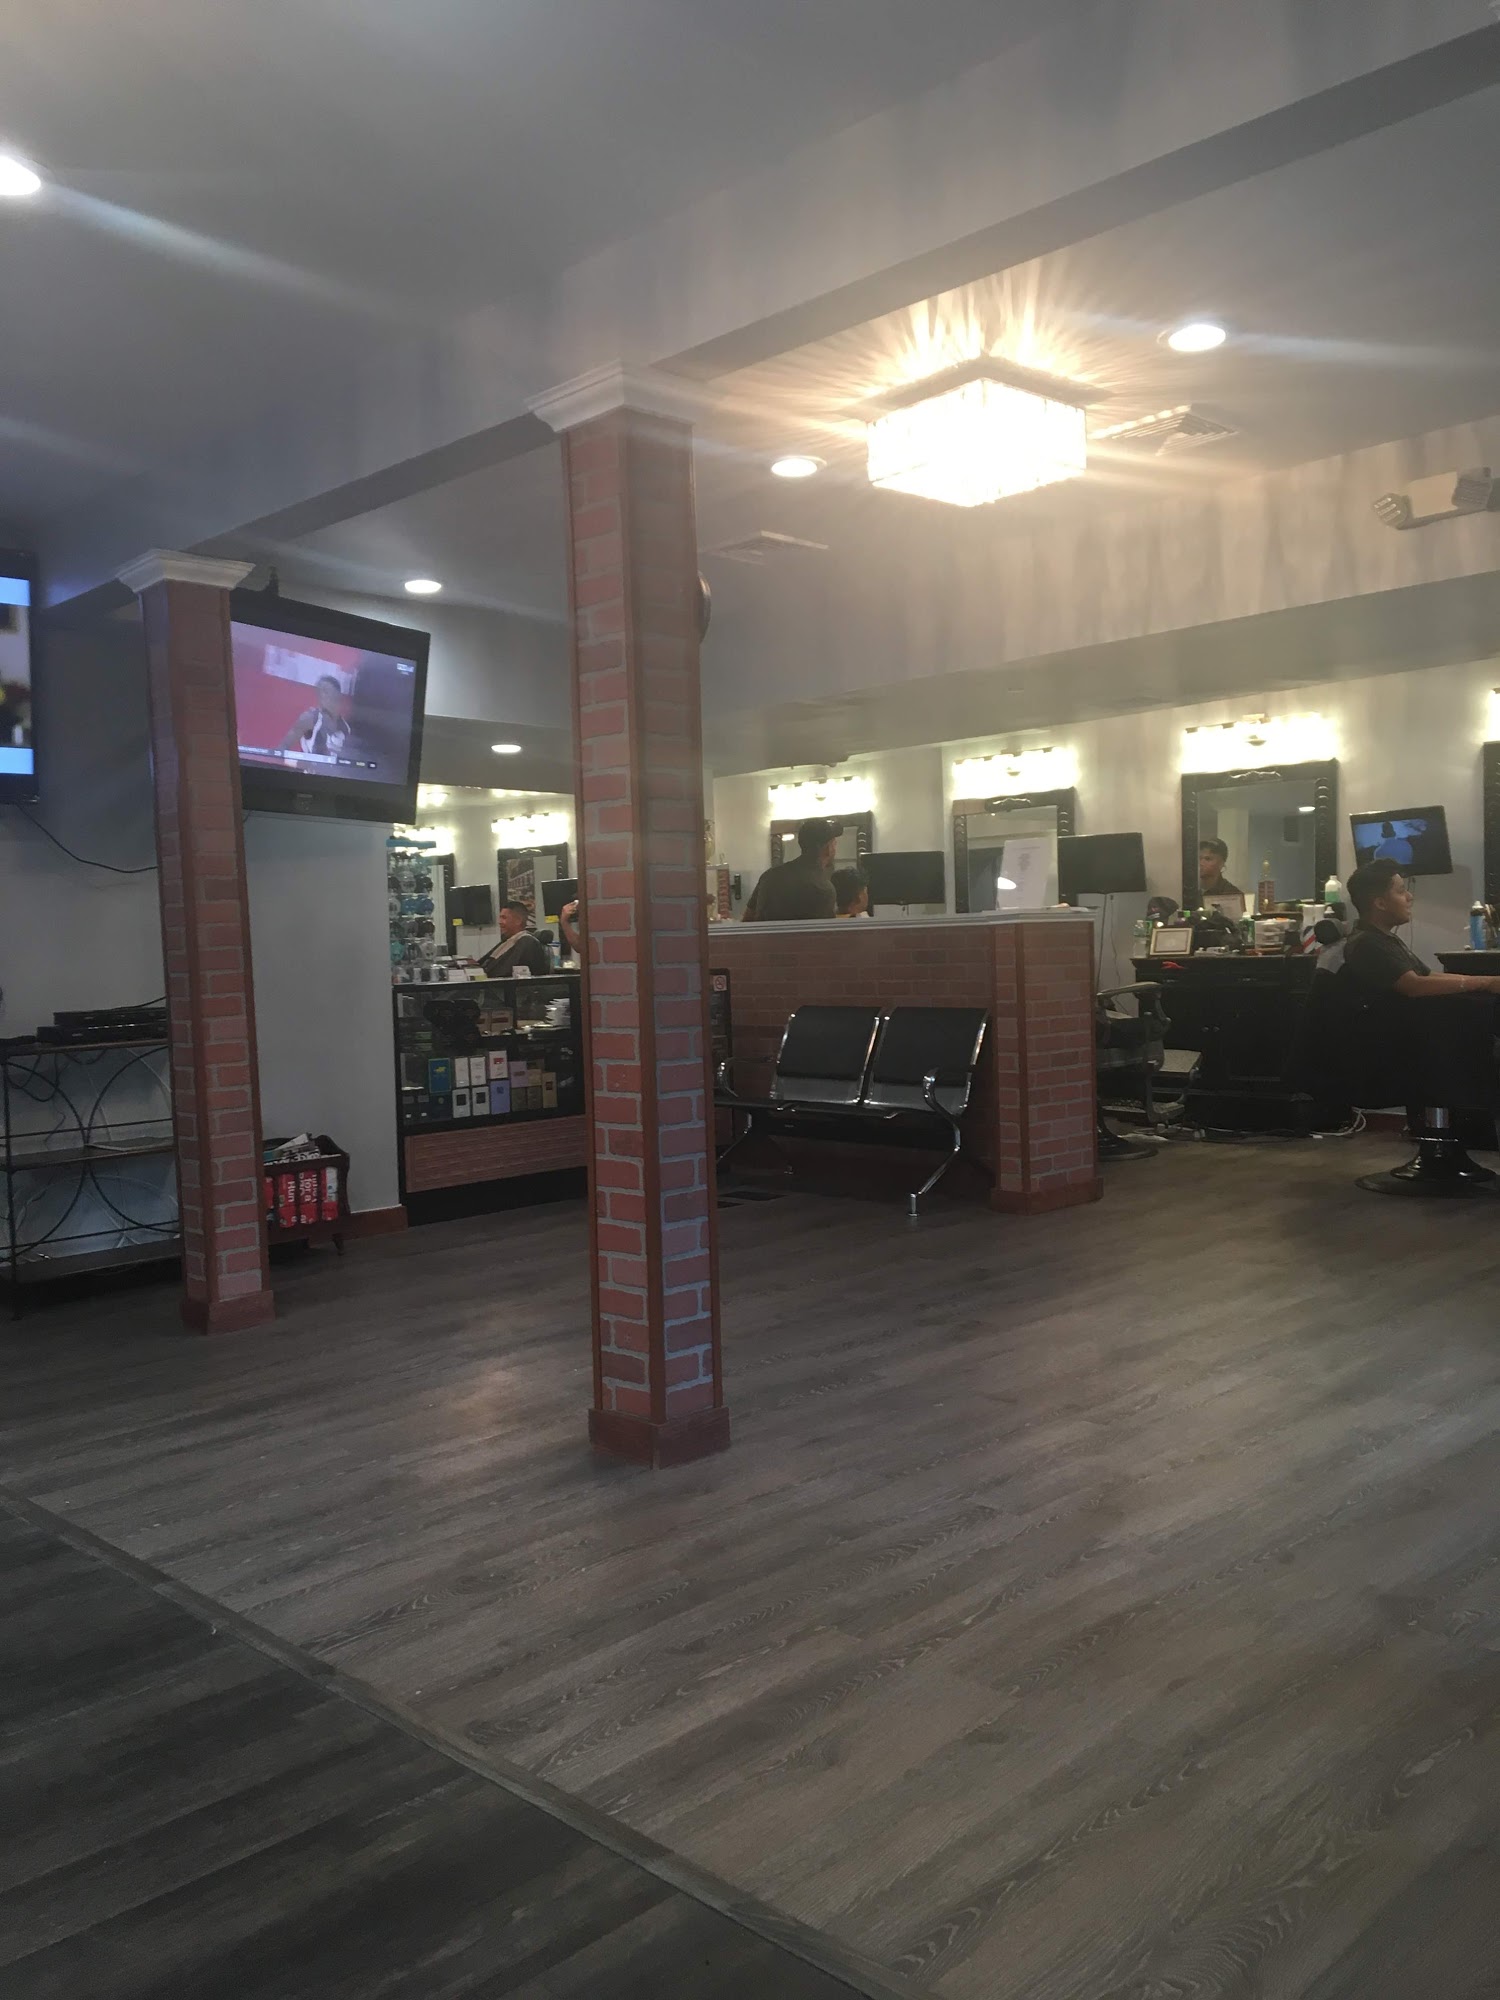 Cut City Barbershop and Salon